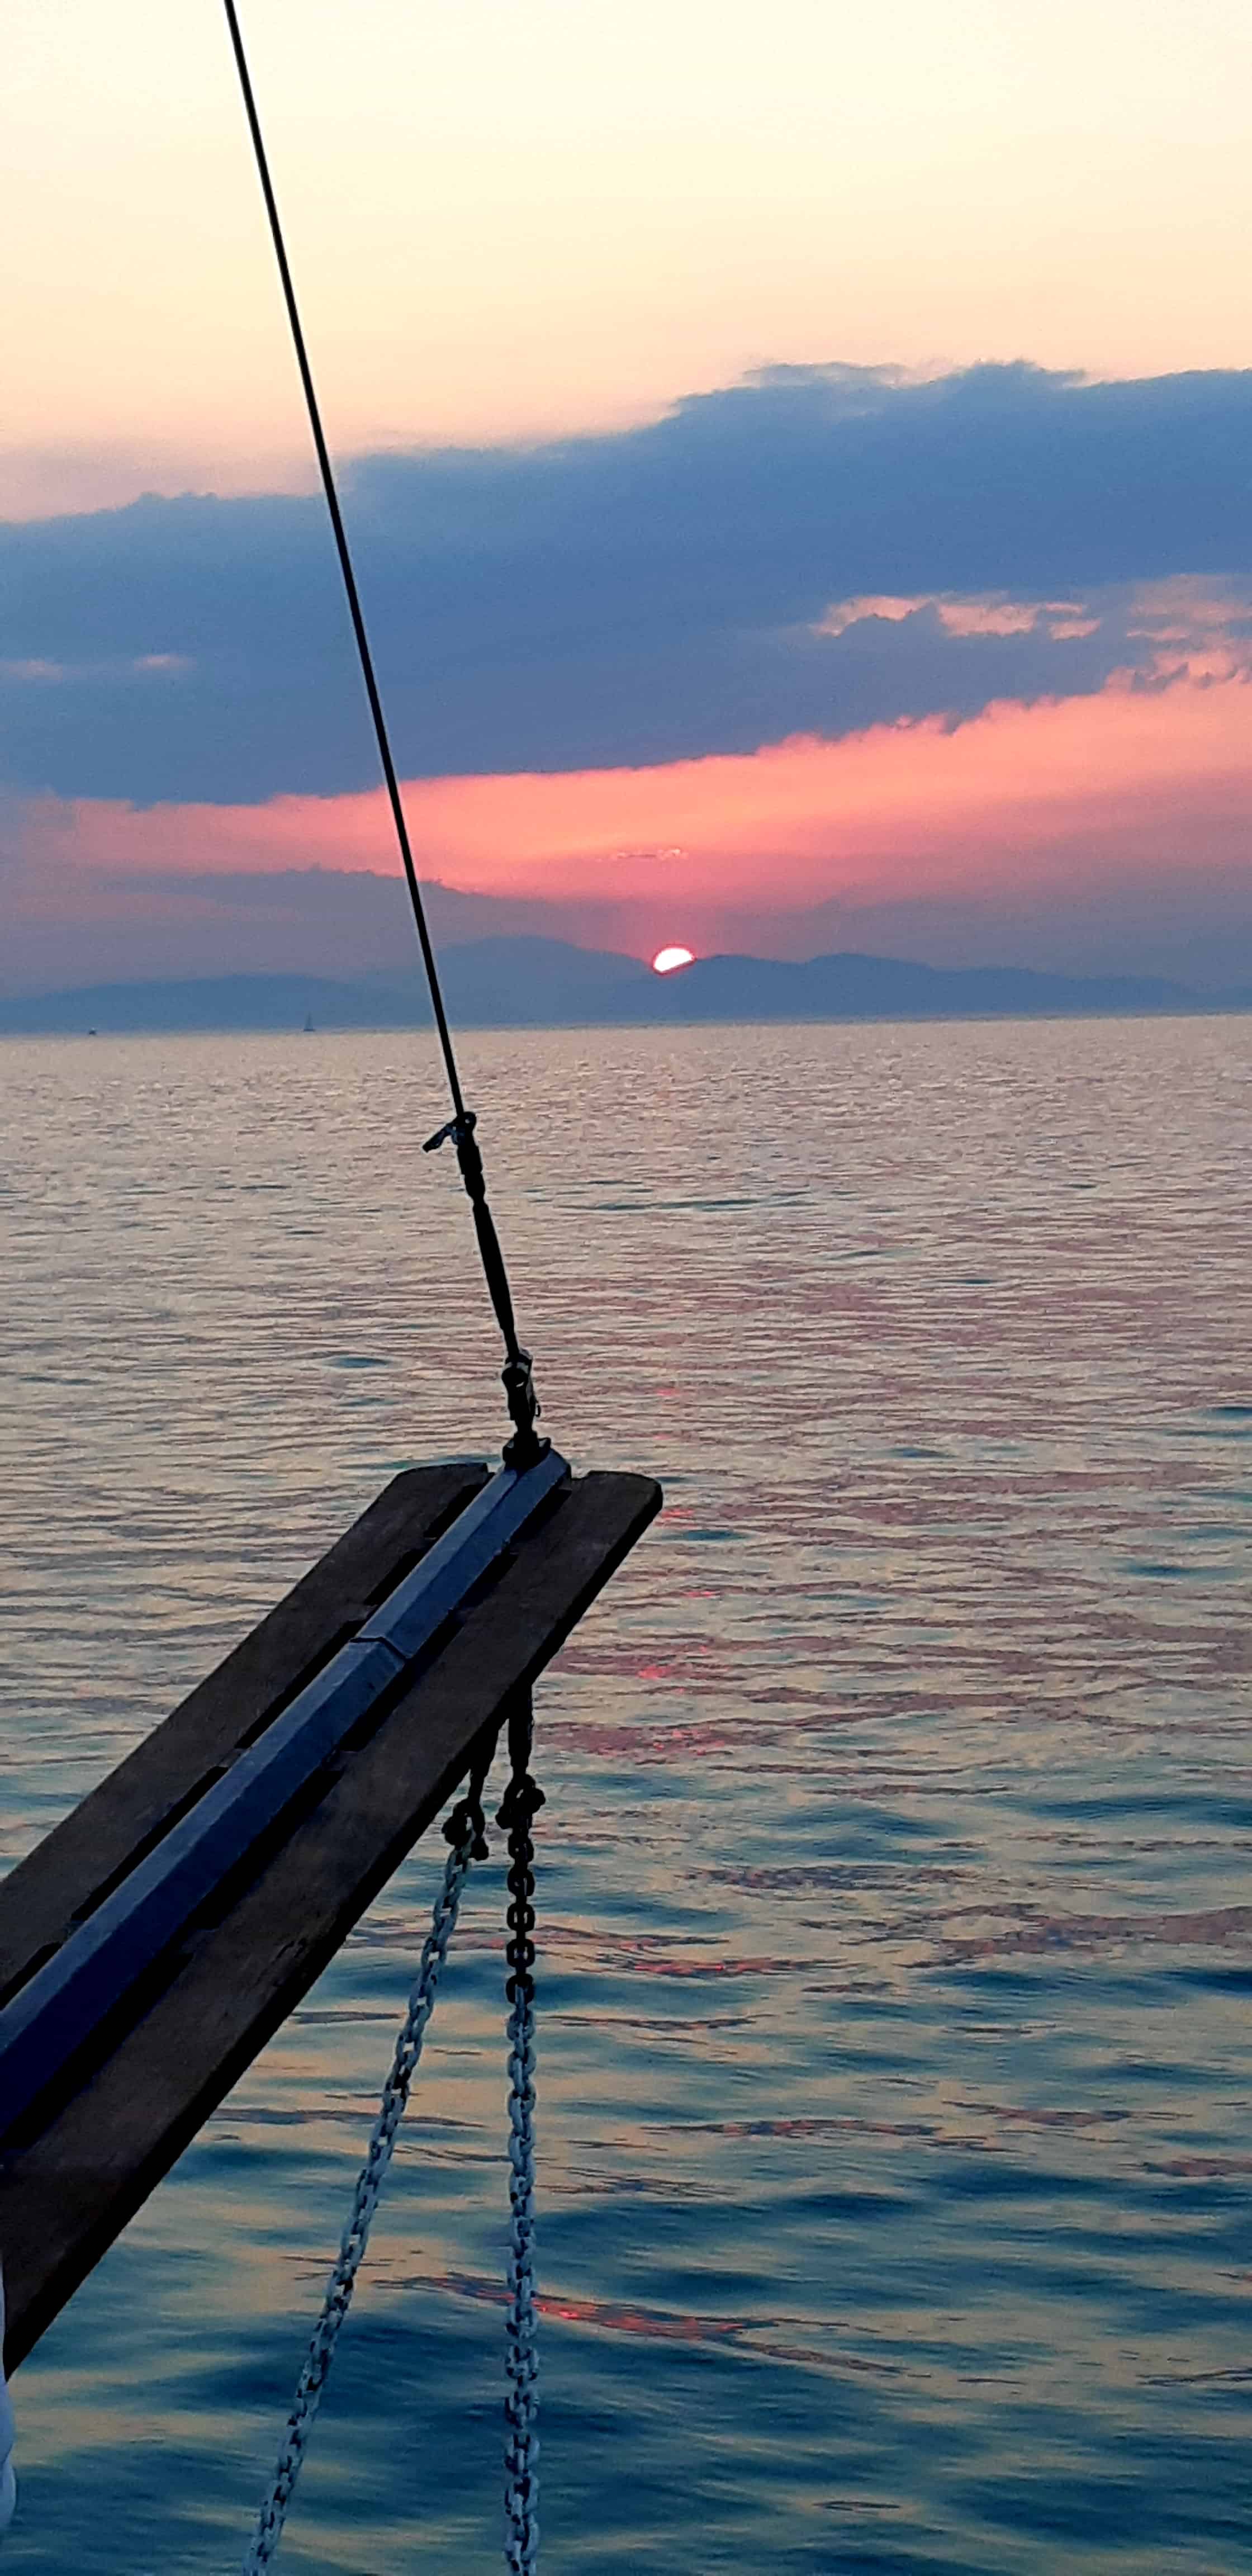  Admiring the sunset. Credits to Eleni Moromalou